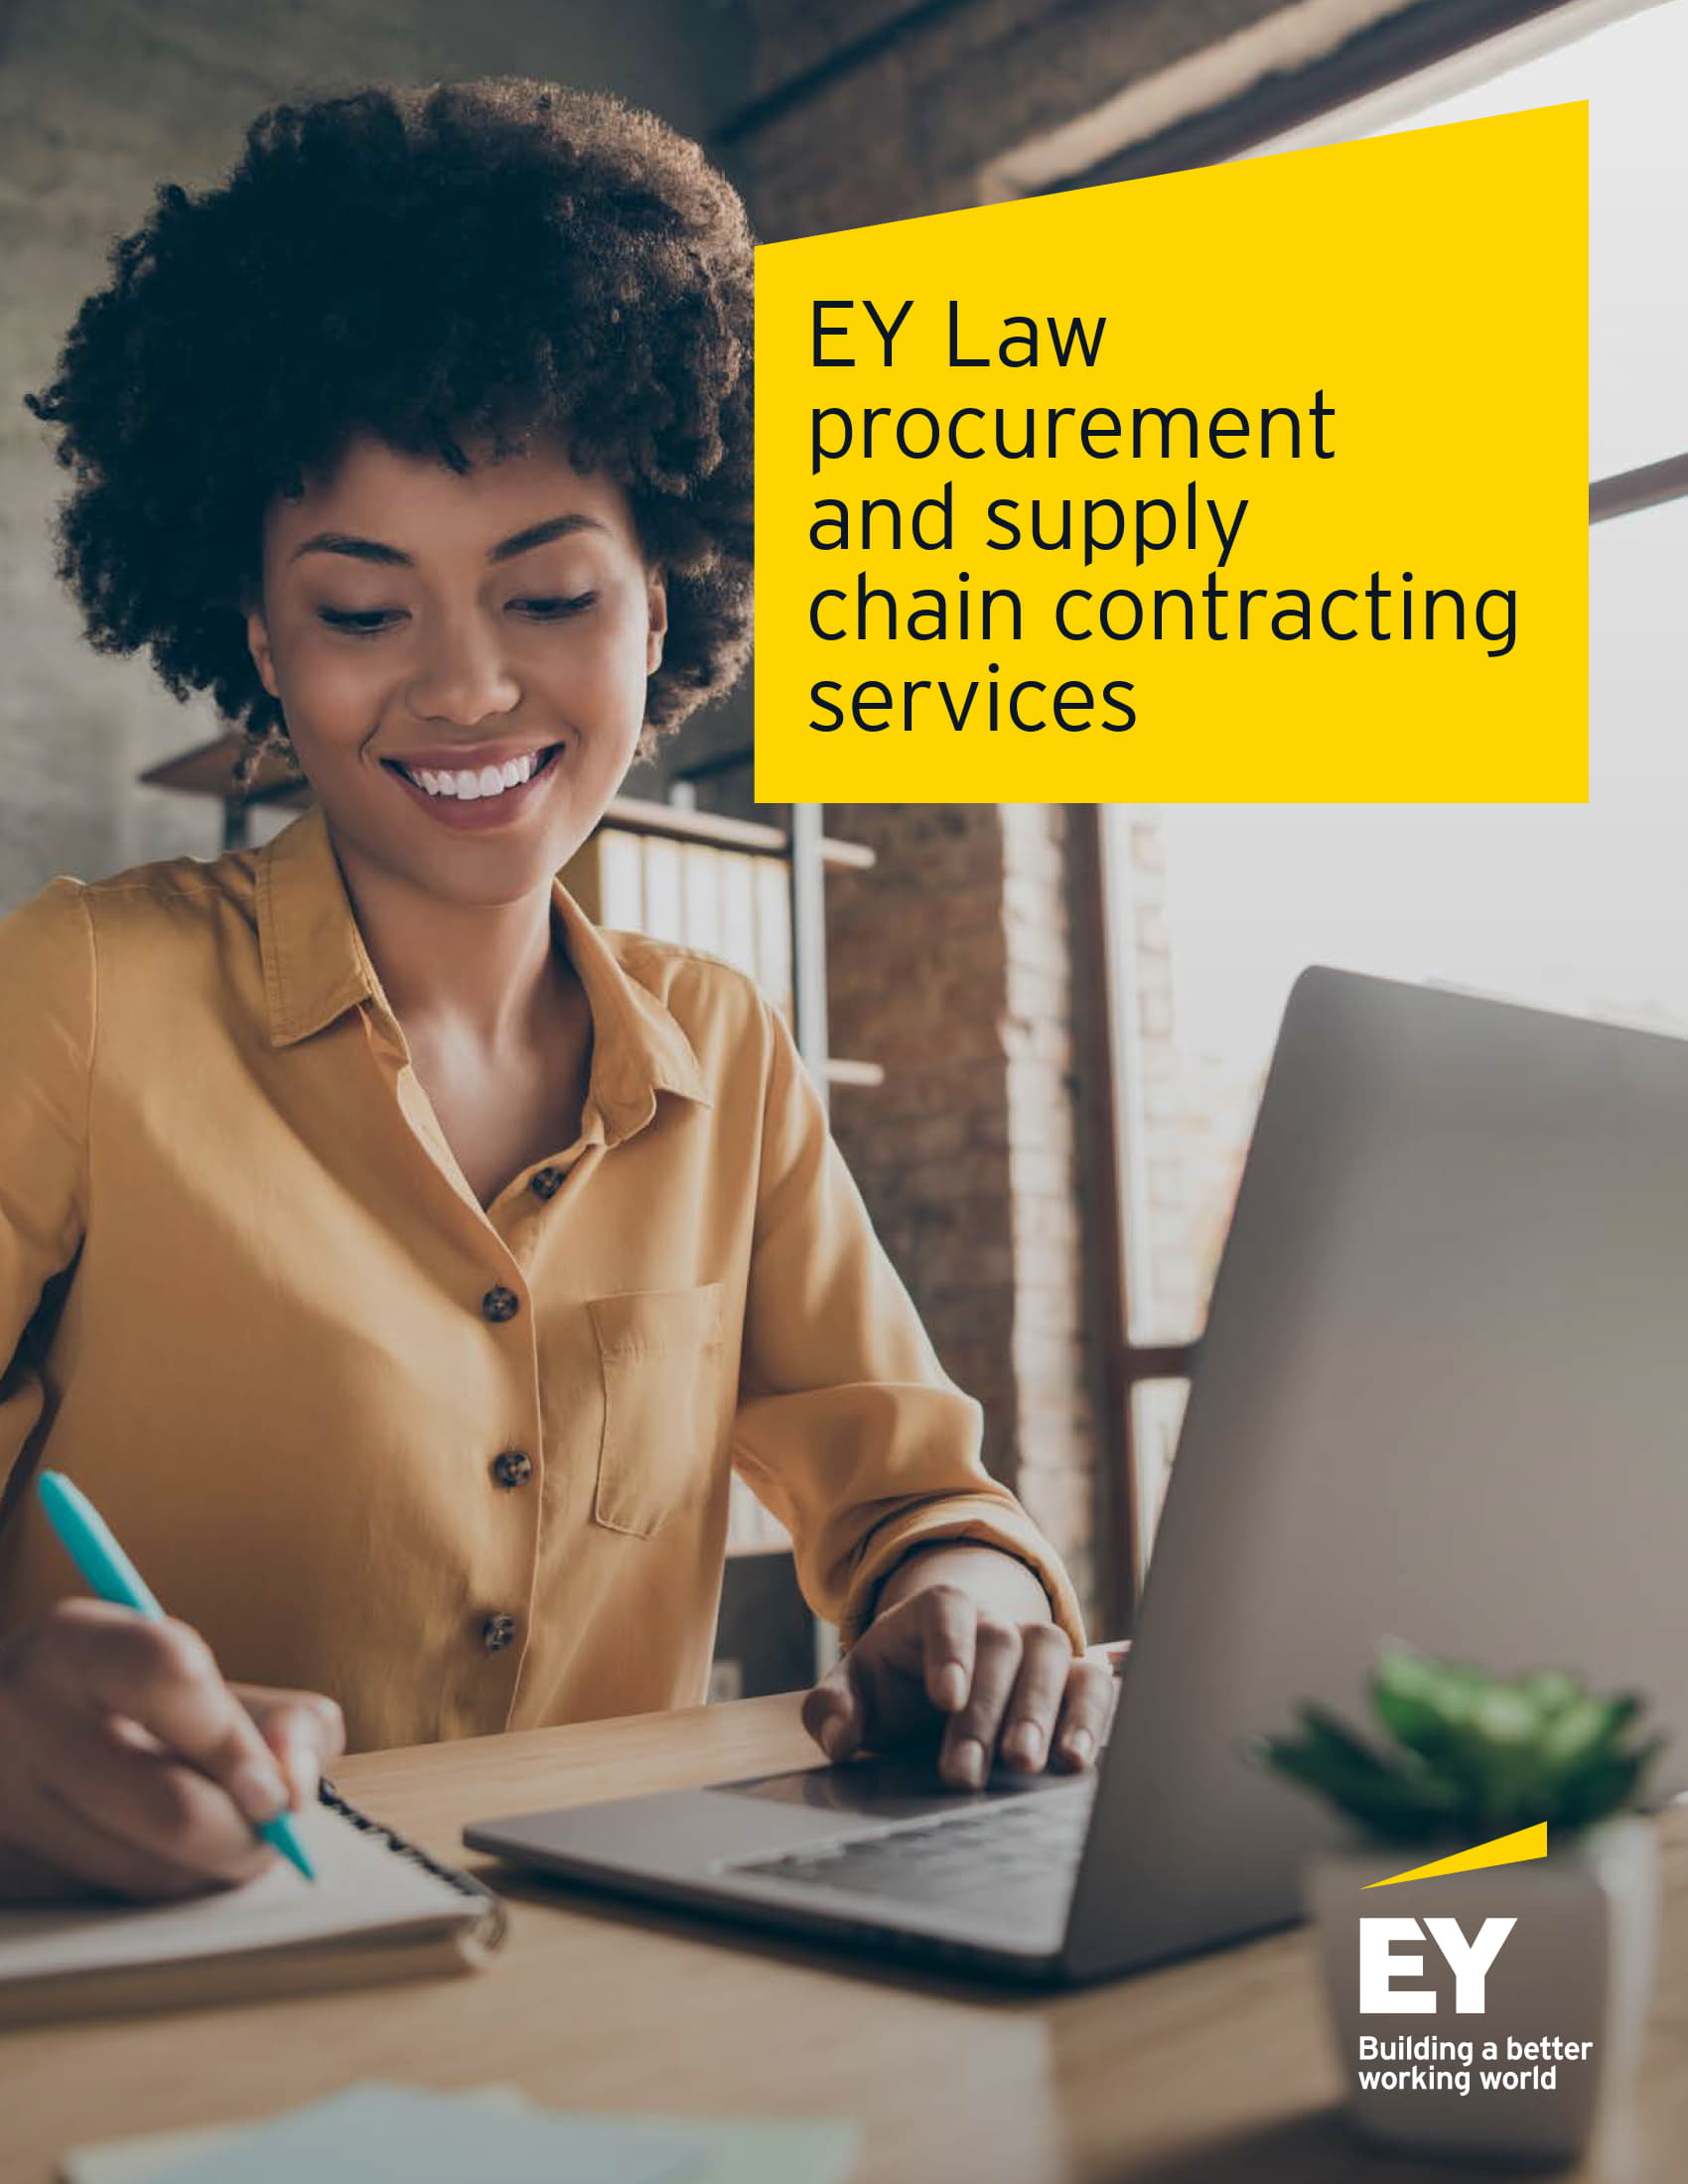 EY Law Procurement Contracting Services, 2020